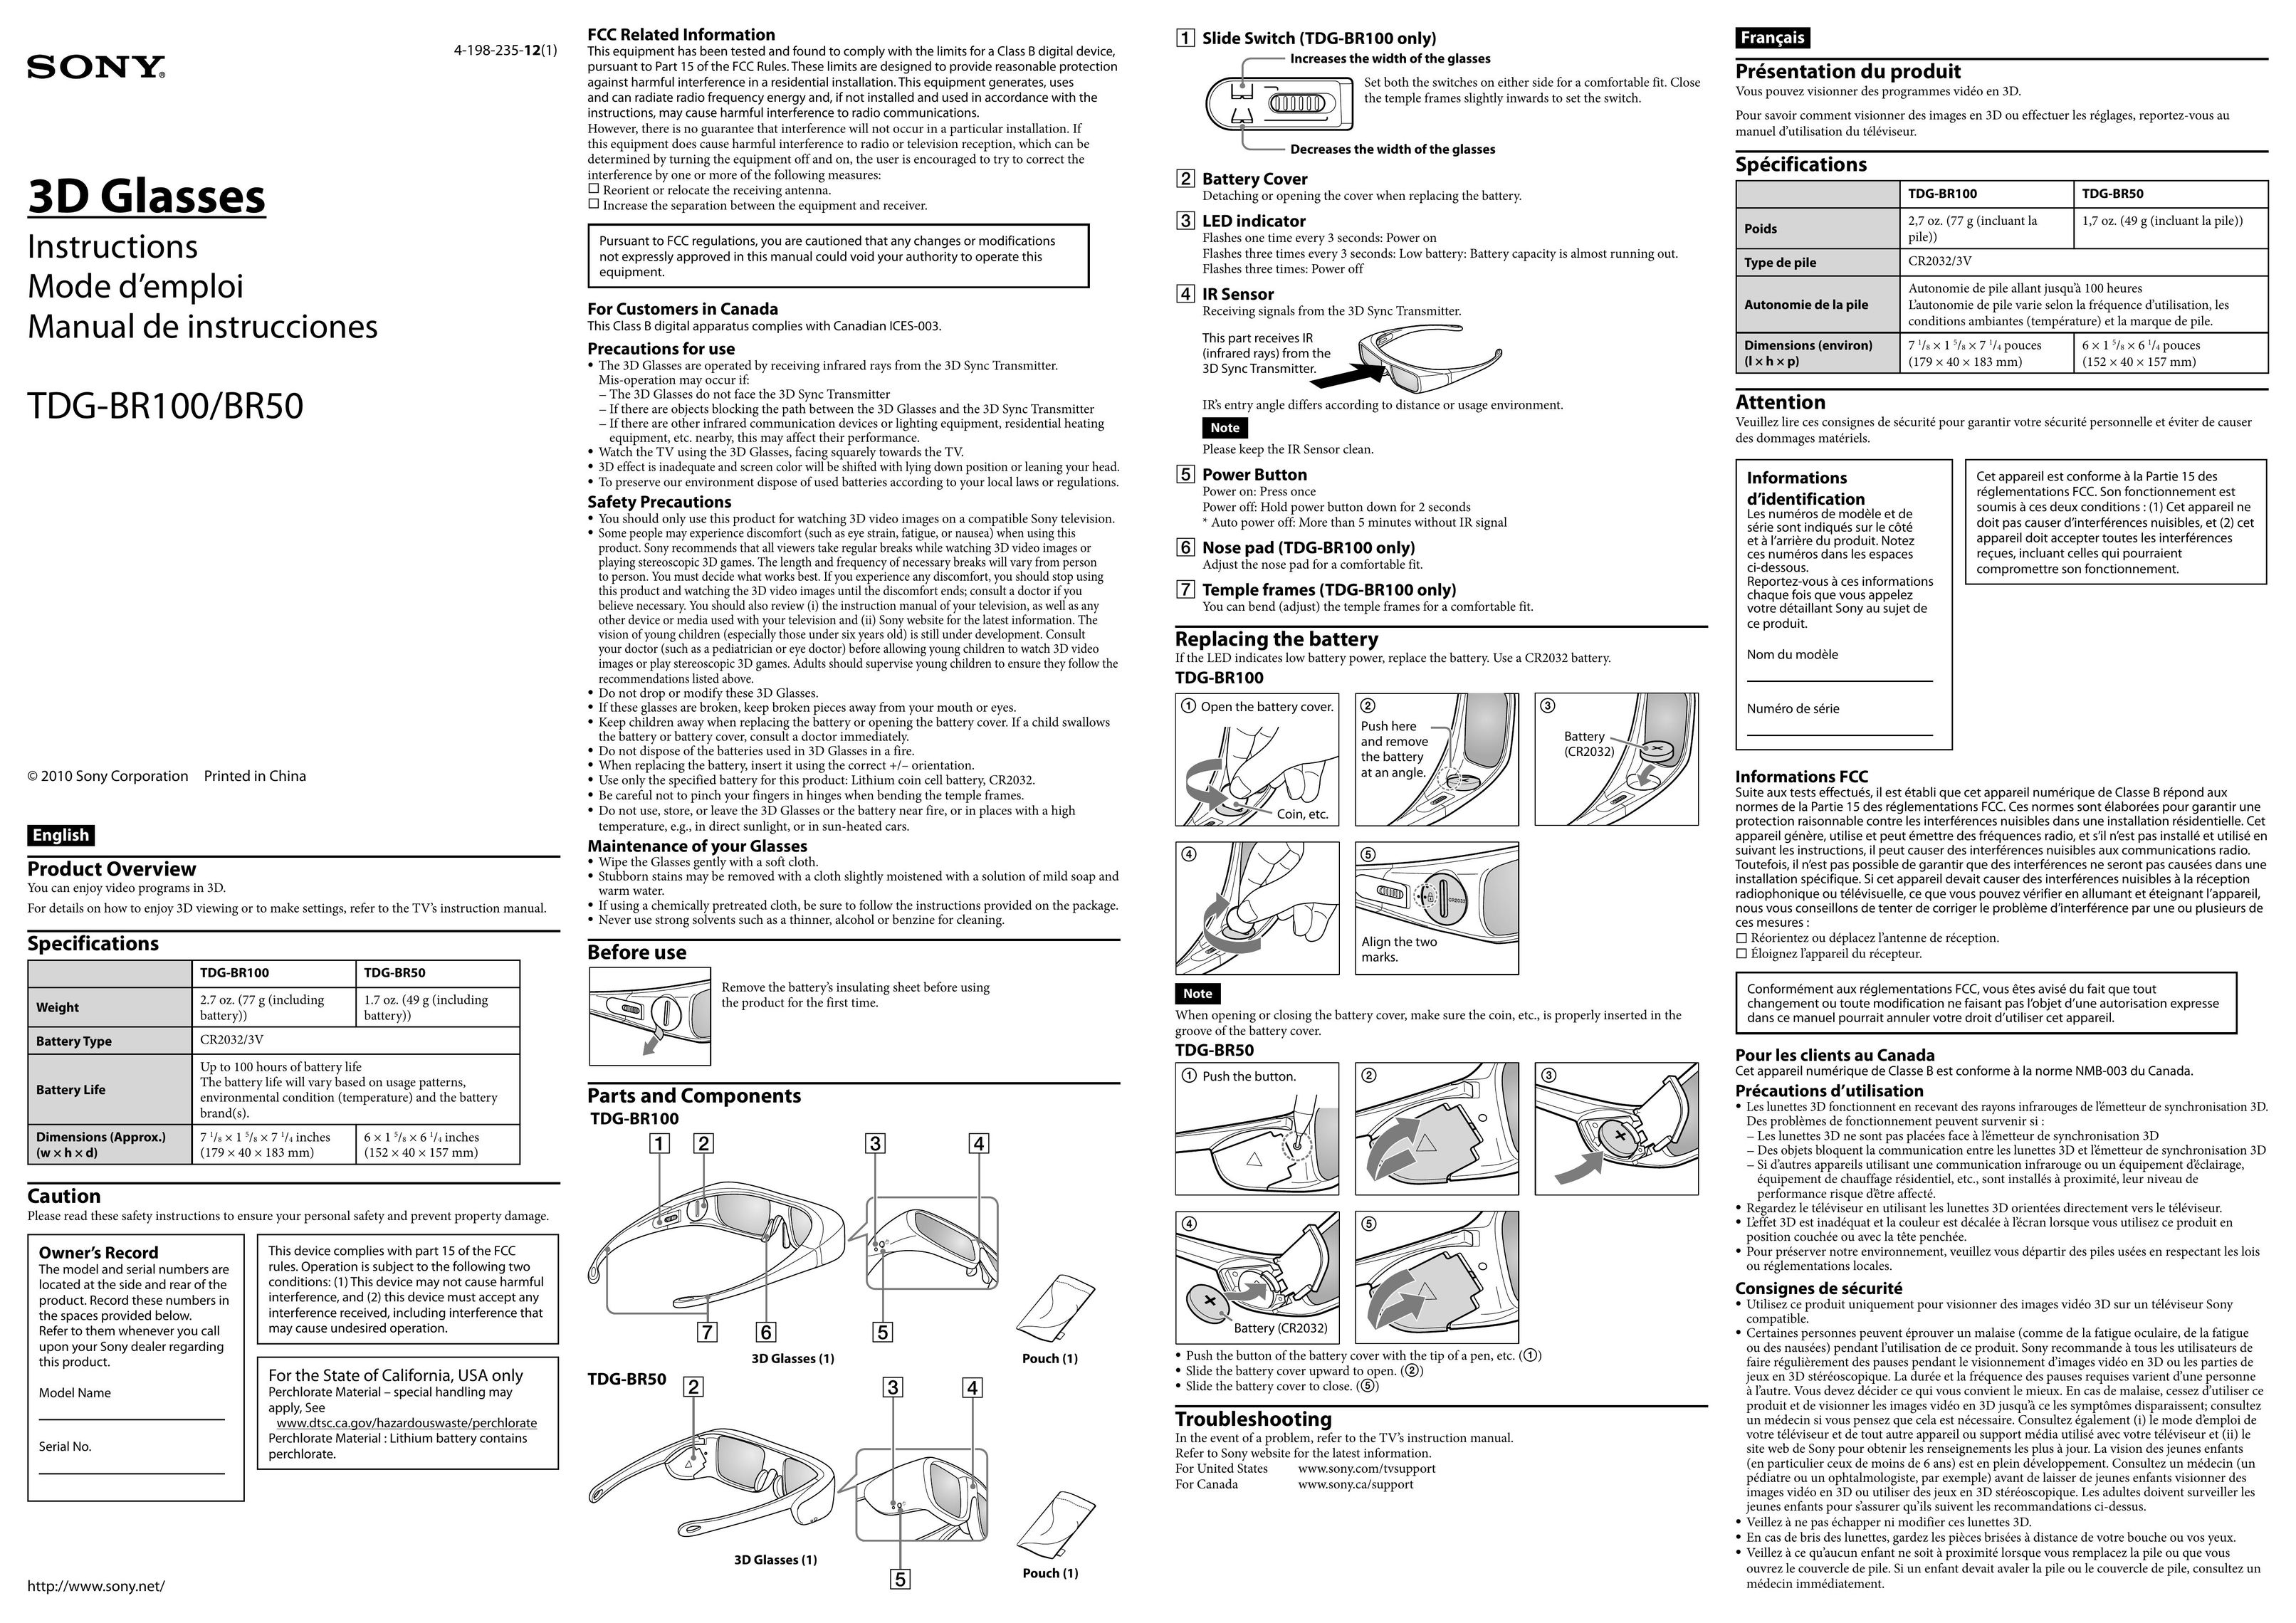 Sony TDG-BR50 Binoculars User Manual